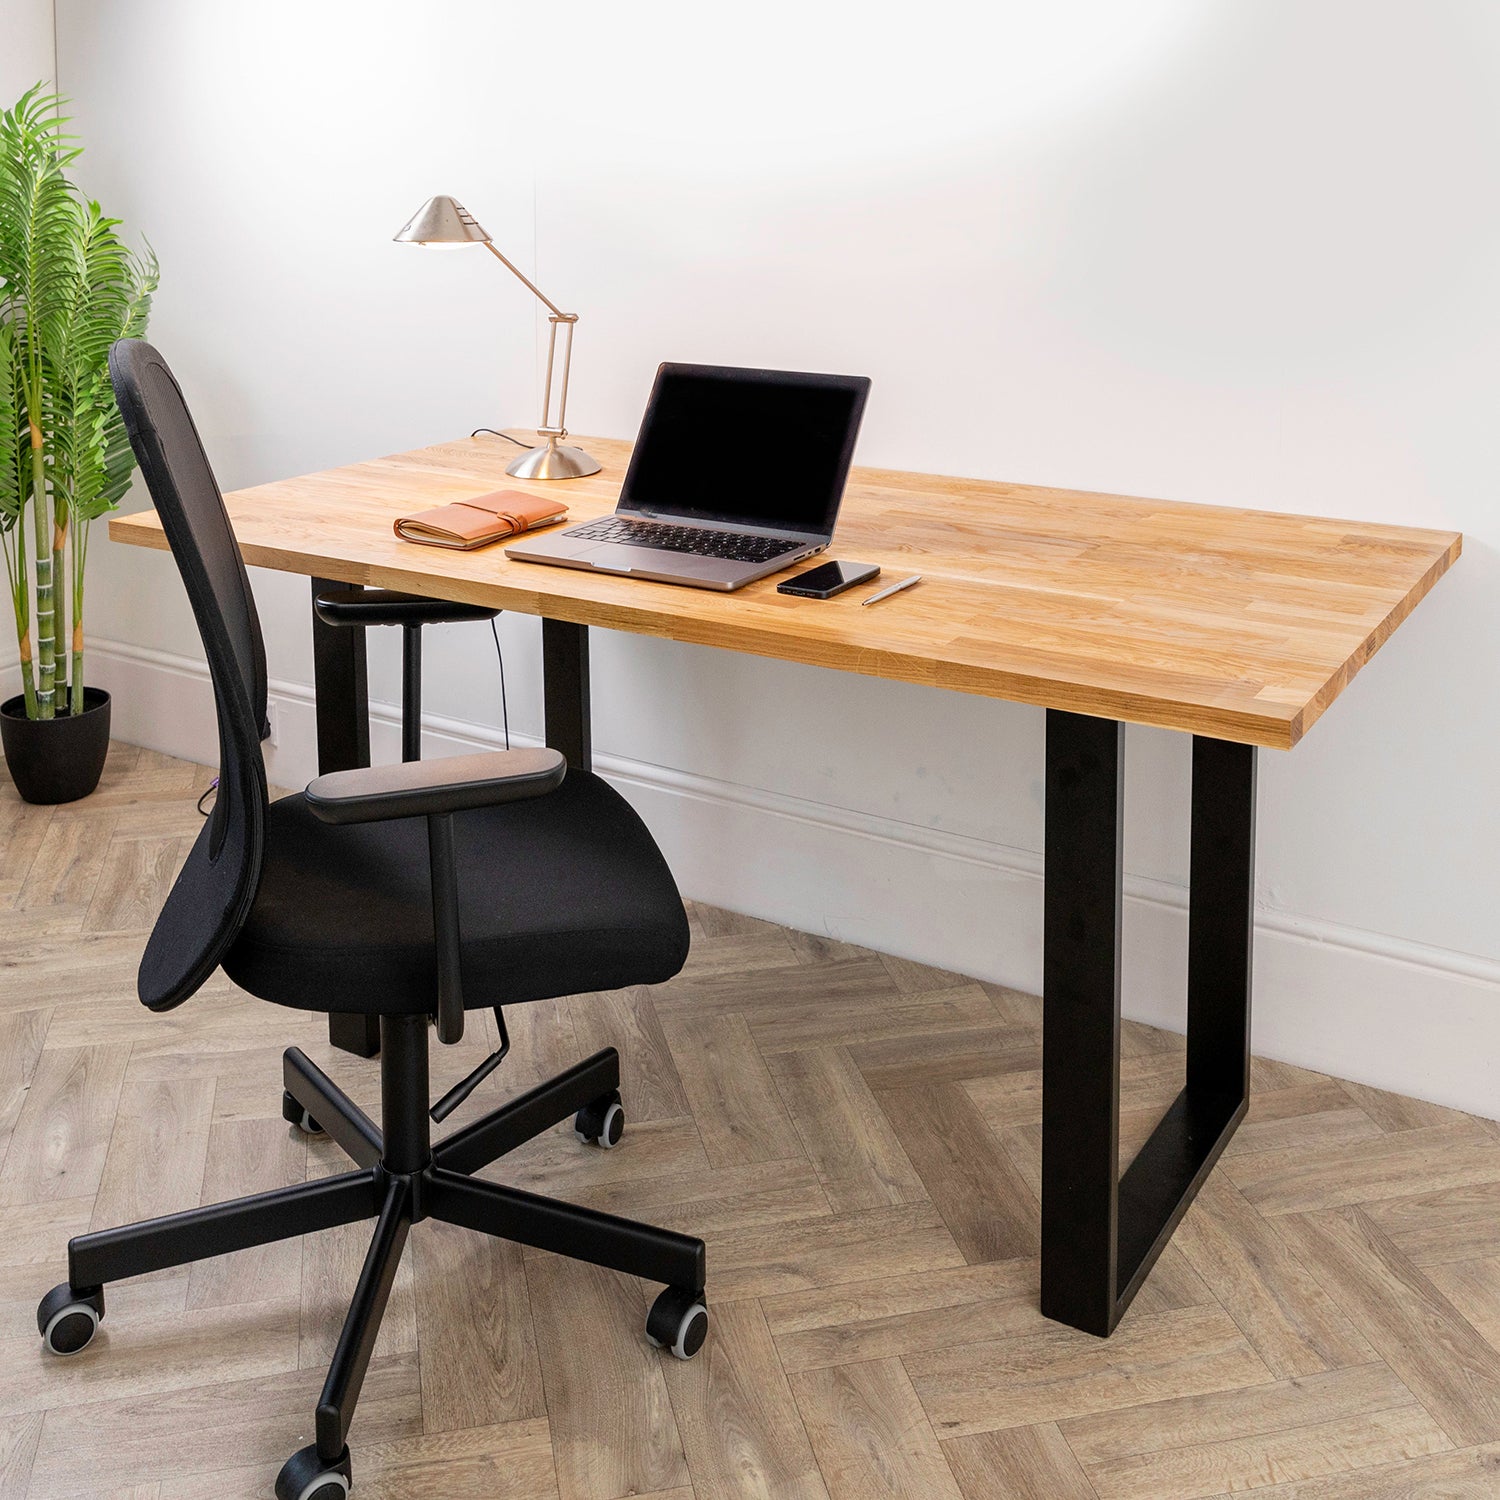 Oak Solid Wood Desk with Square Metal Legs - 27mm thick desktop